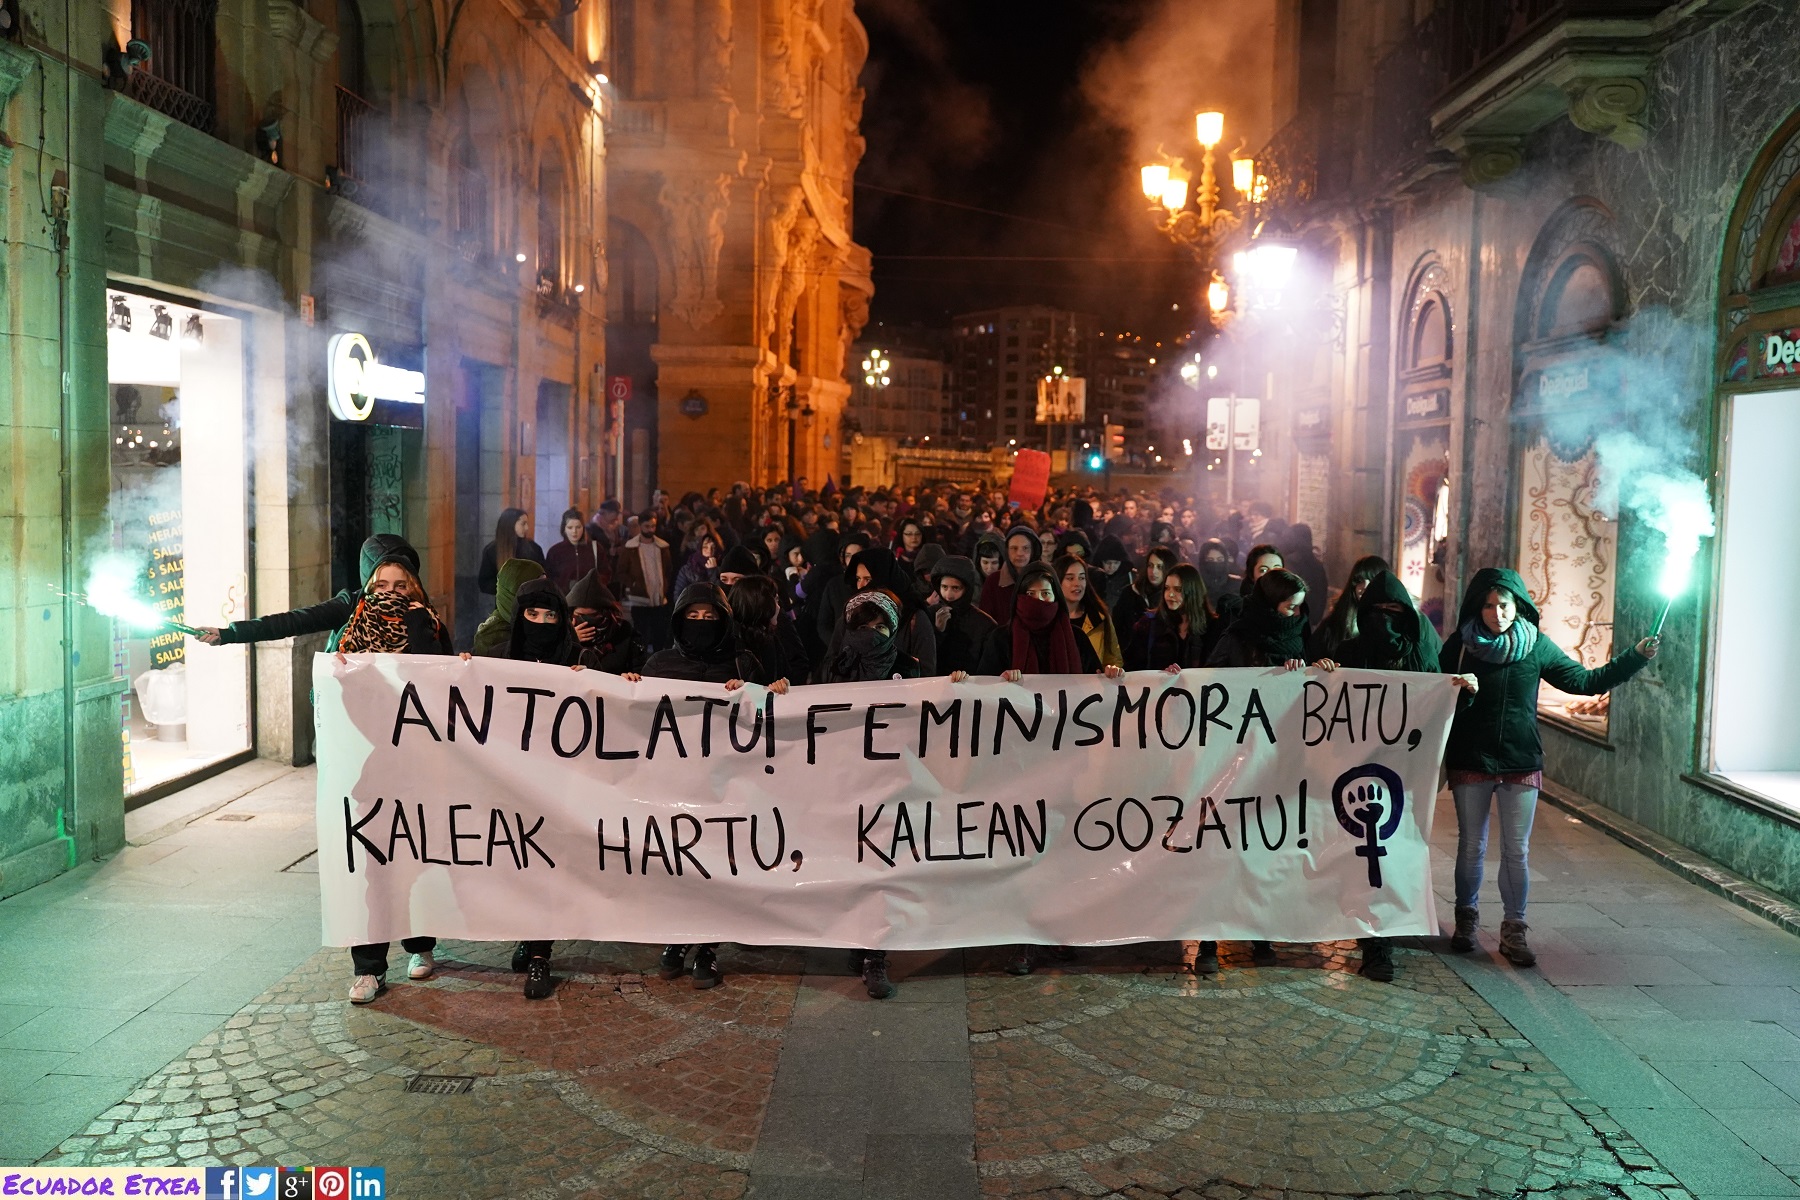 feminista-feminismo-vasco-bilbao-mujeres-autodefensa-8-marzo-machista